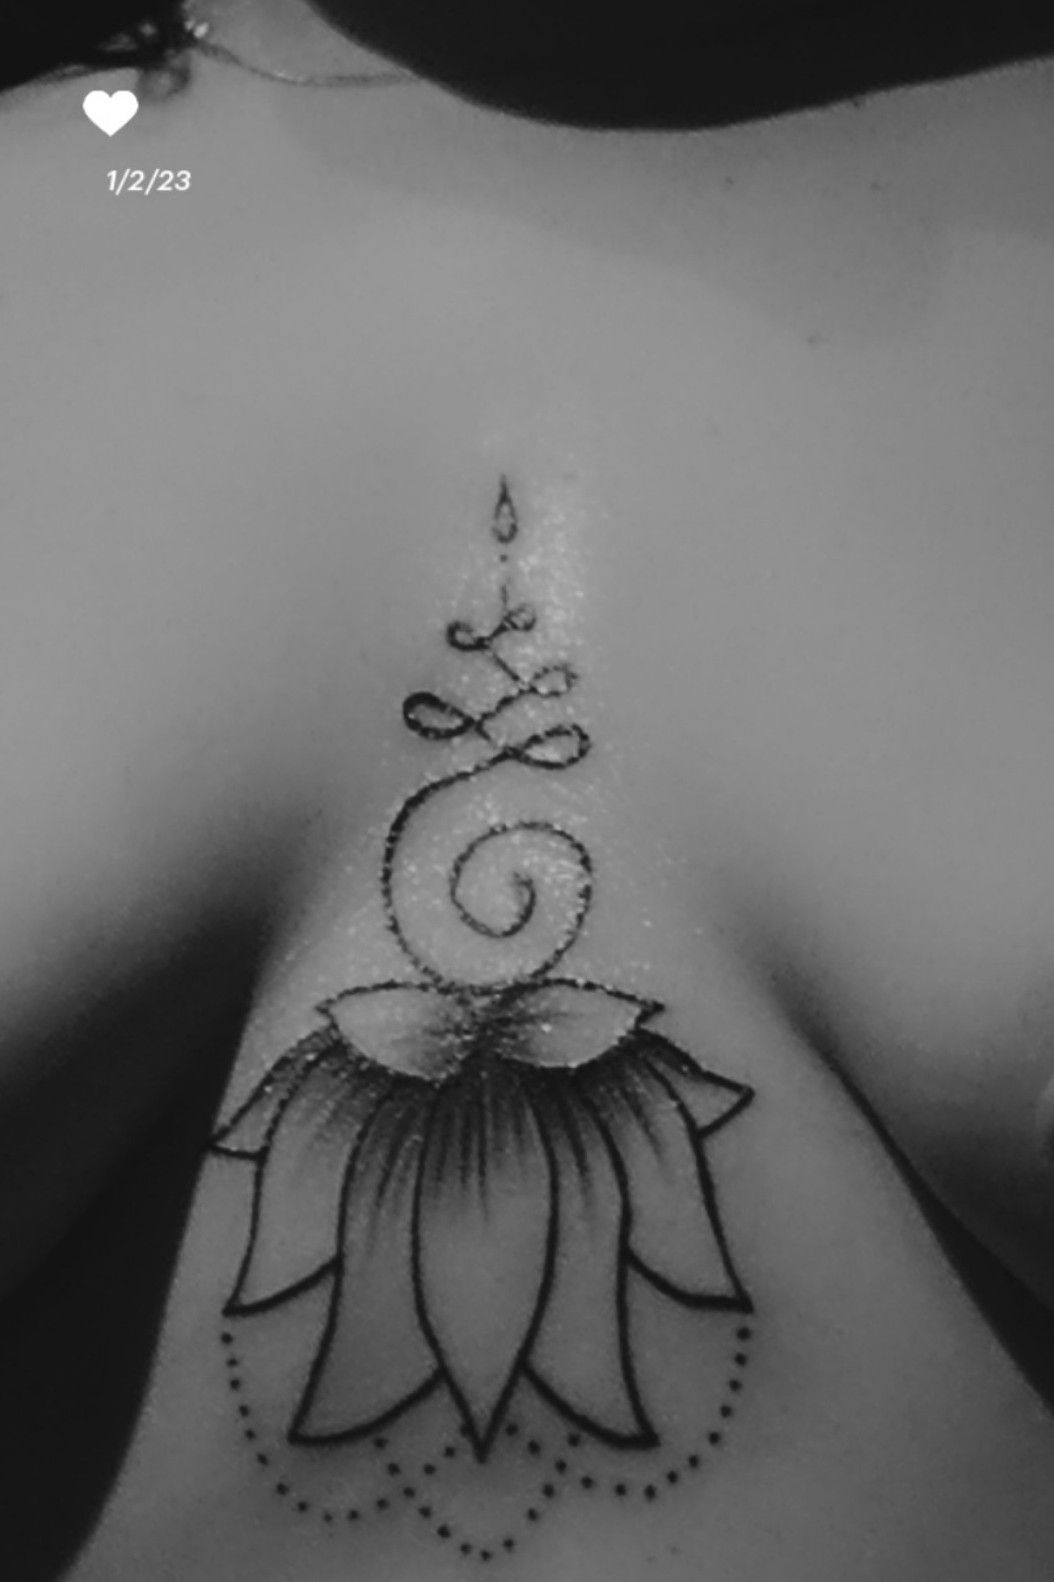 Tattoo uploaded by Maurício Tatuador • Tattoo Under boobs dots and lines  • Tattoodo